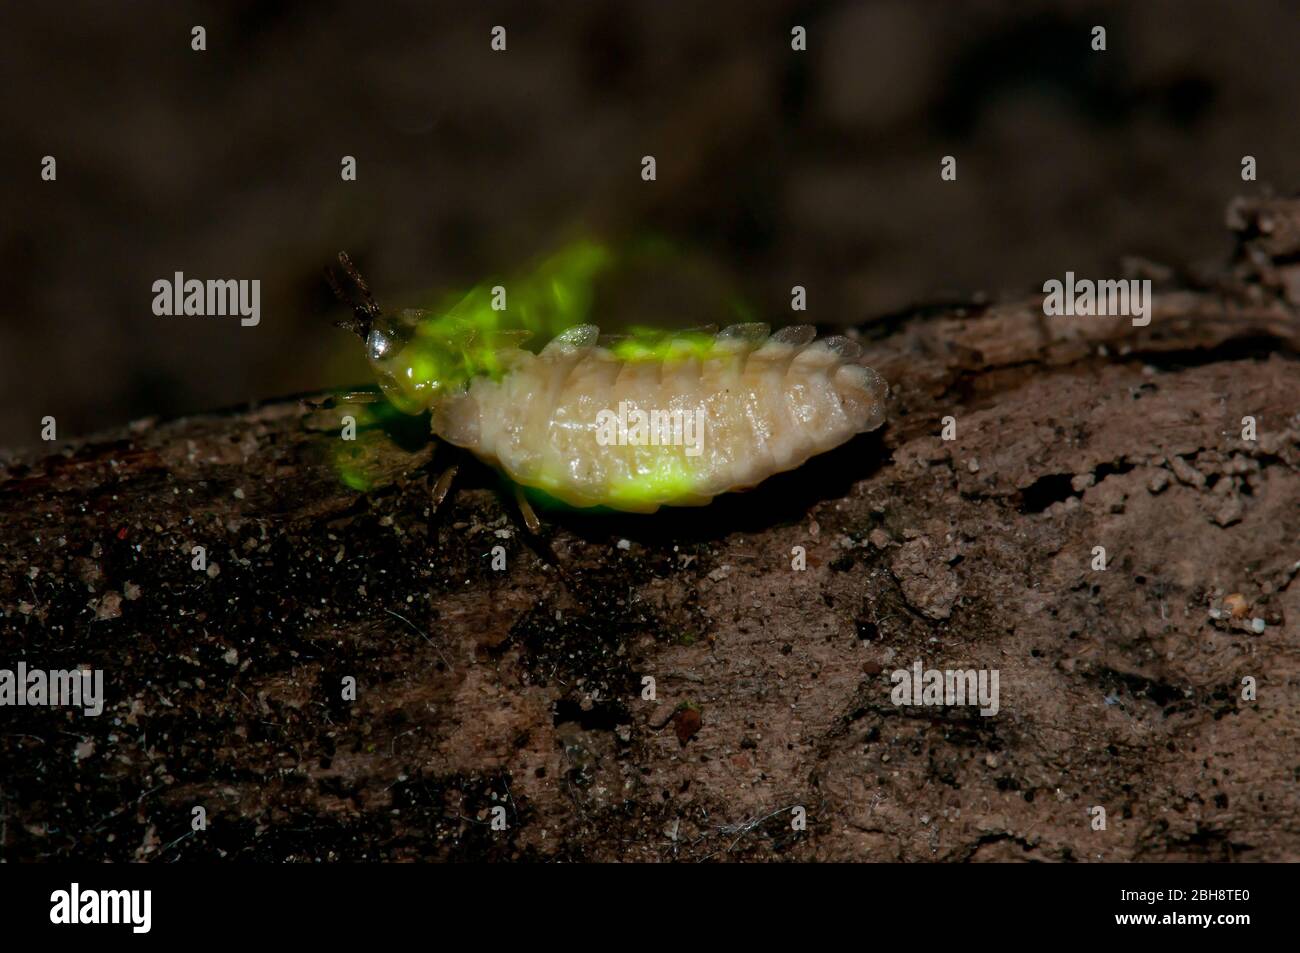 Firefly, Lampyridae, with illuminated light organs, Bavaria, Germany Stock Photo